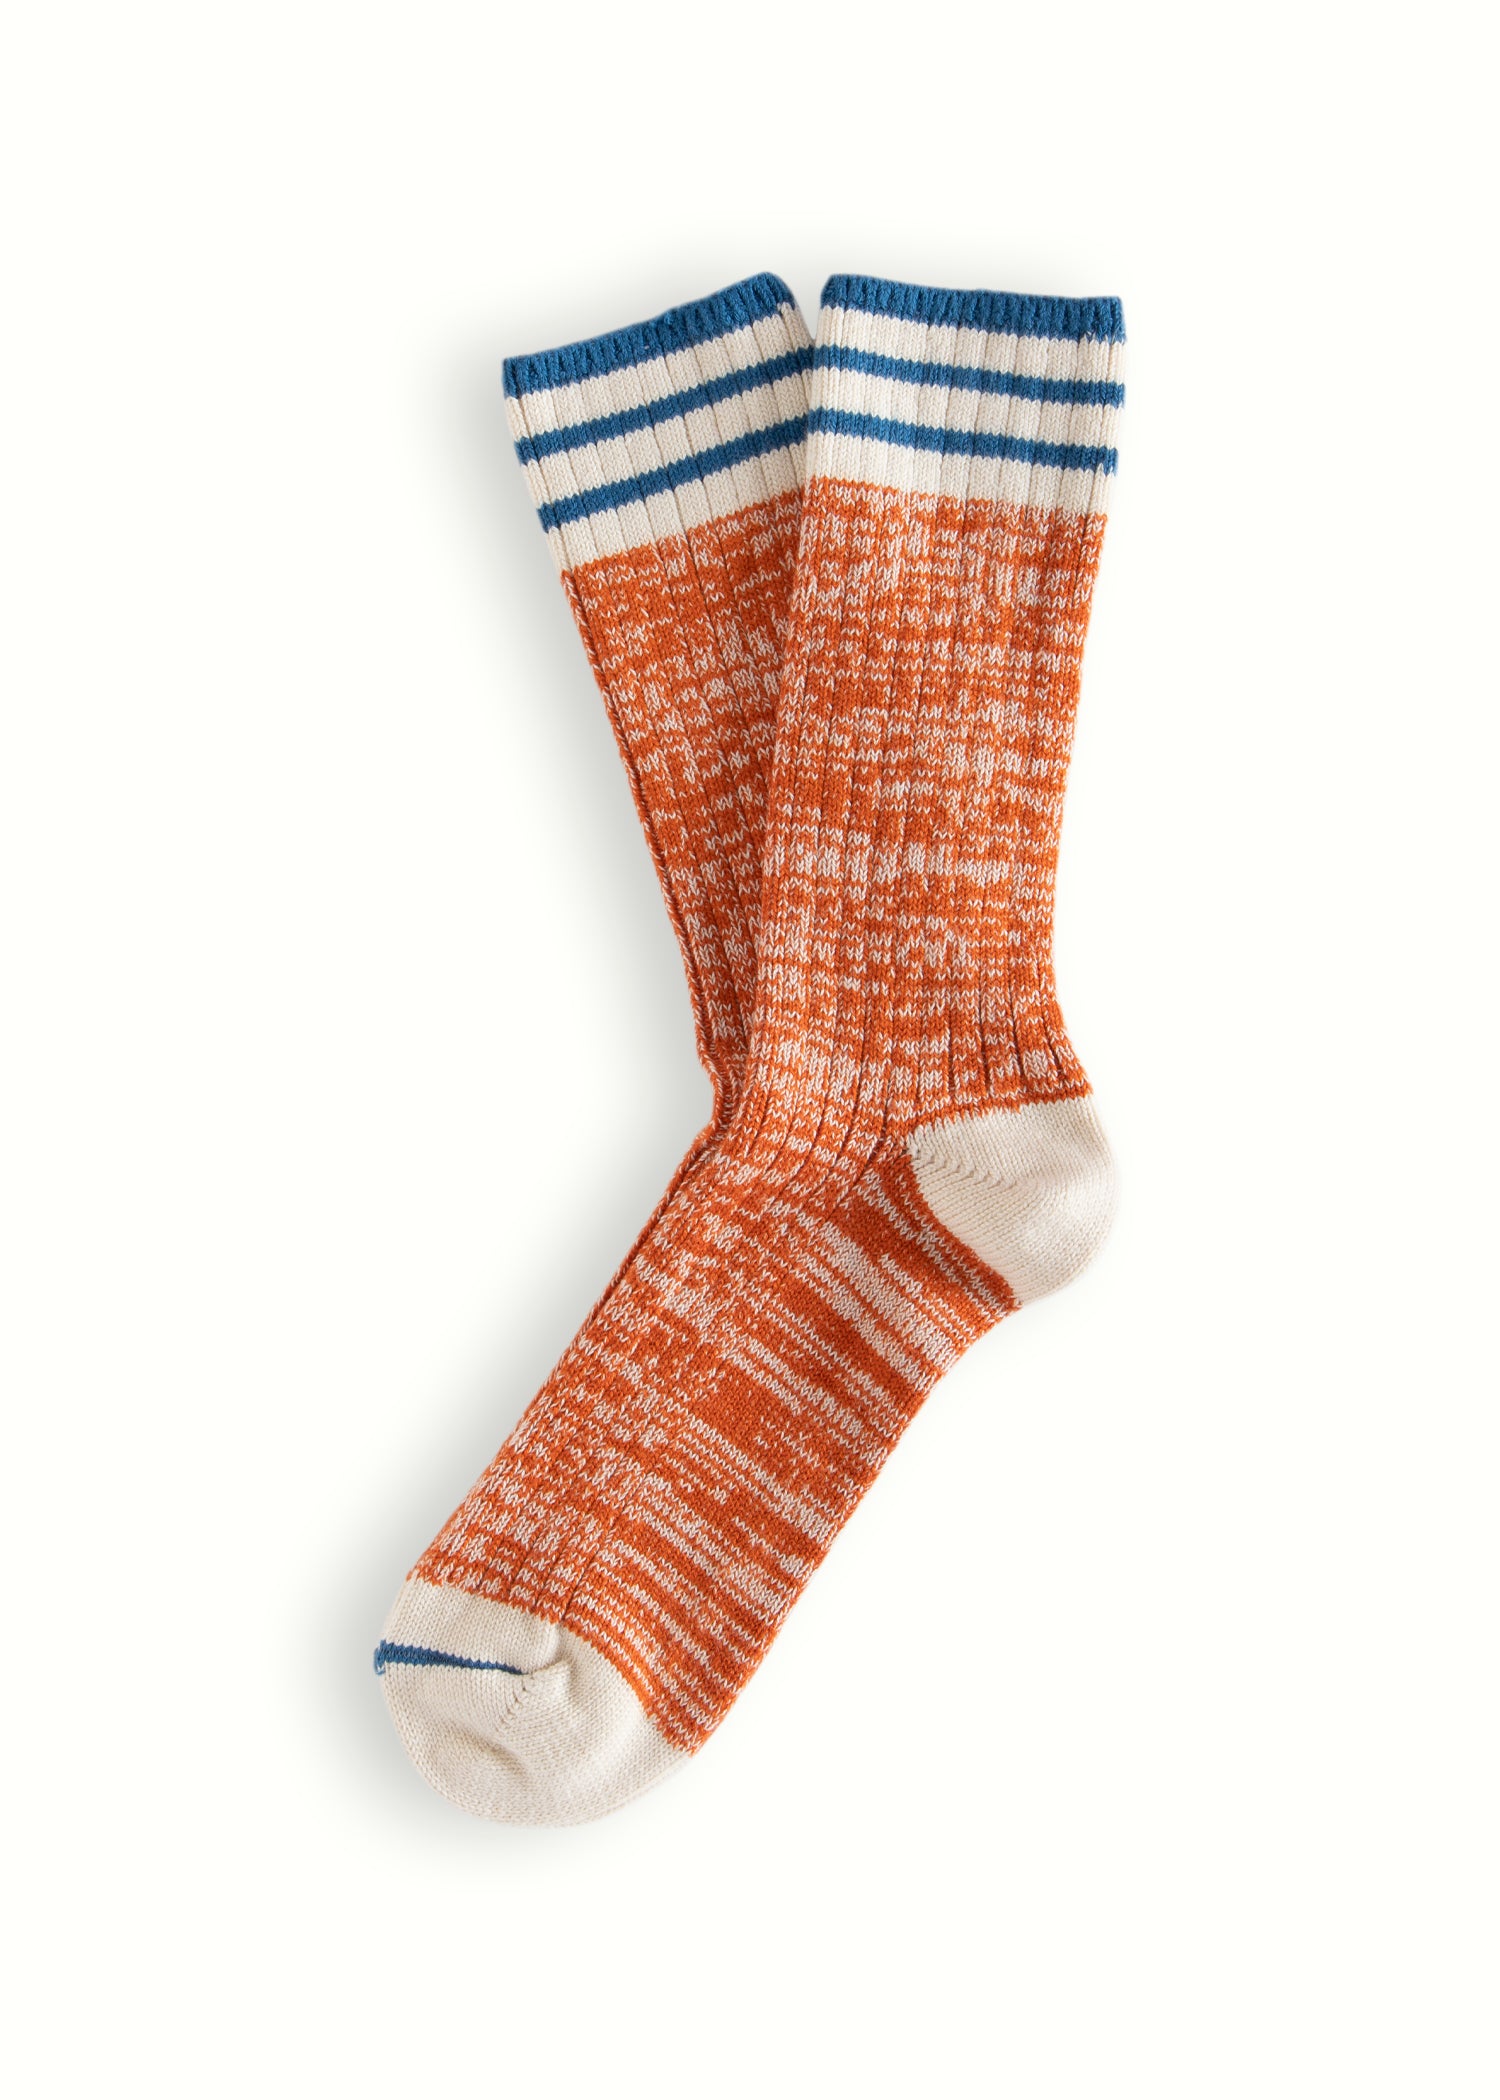 NAUTICAL TURN Oceanside Orange Socks